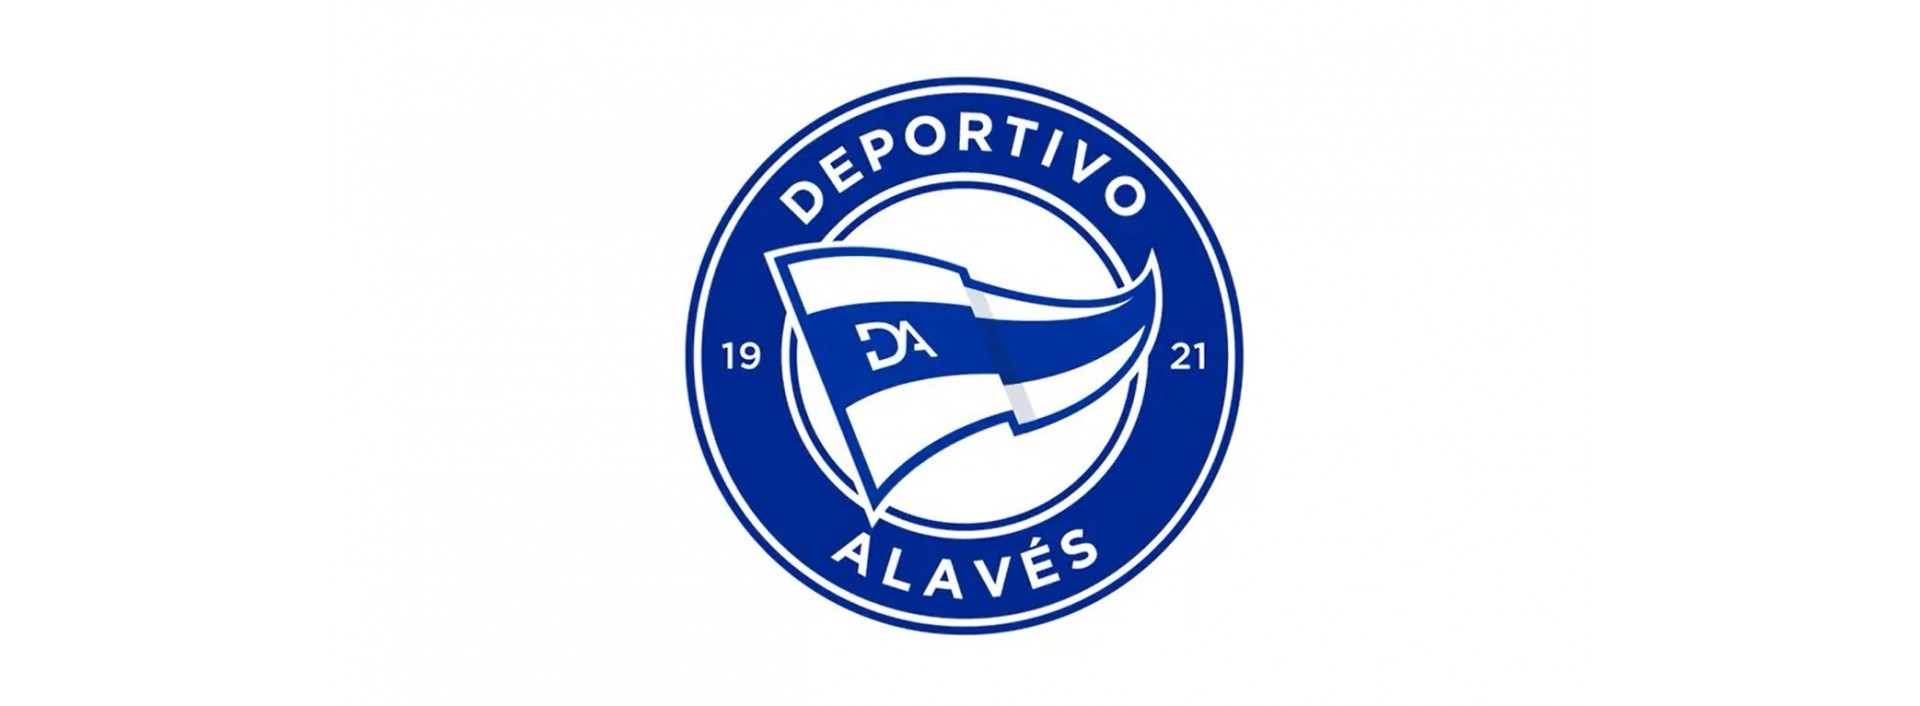 DEPORTIVO ALAVES